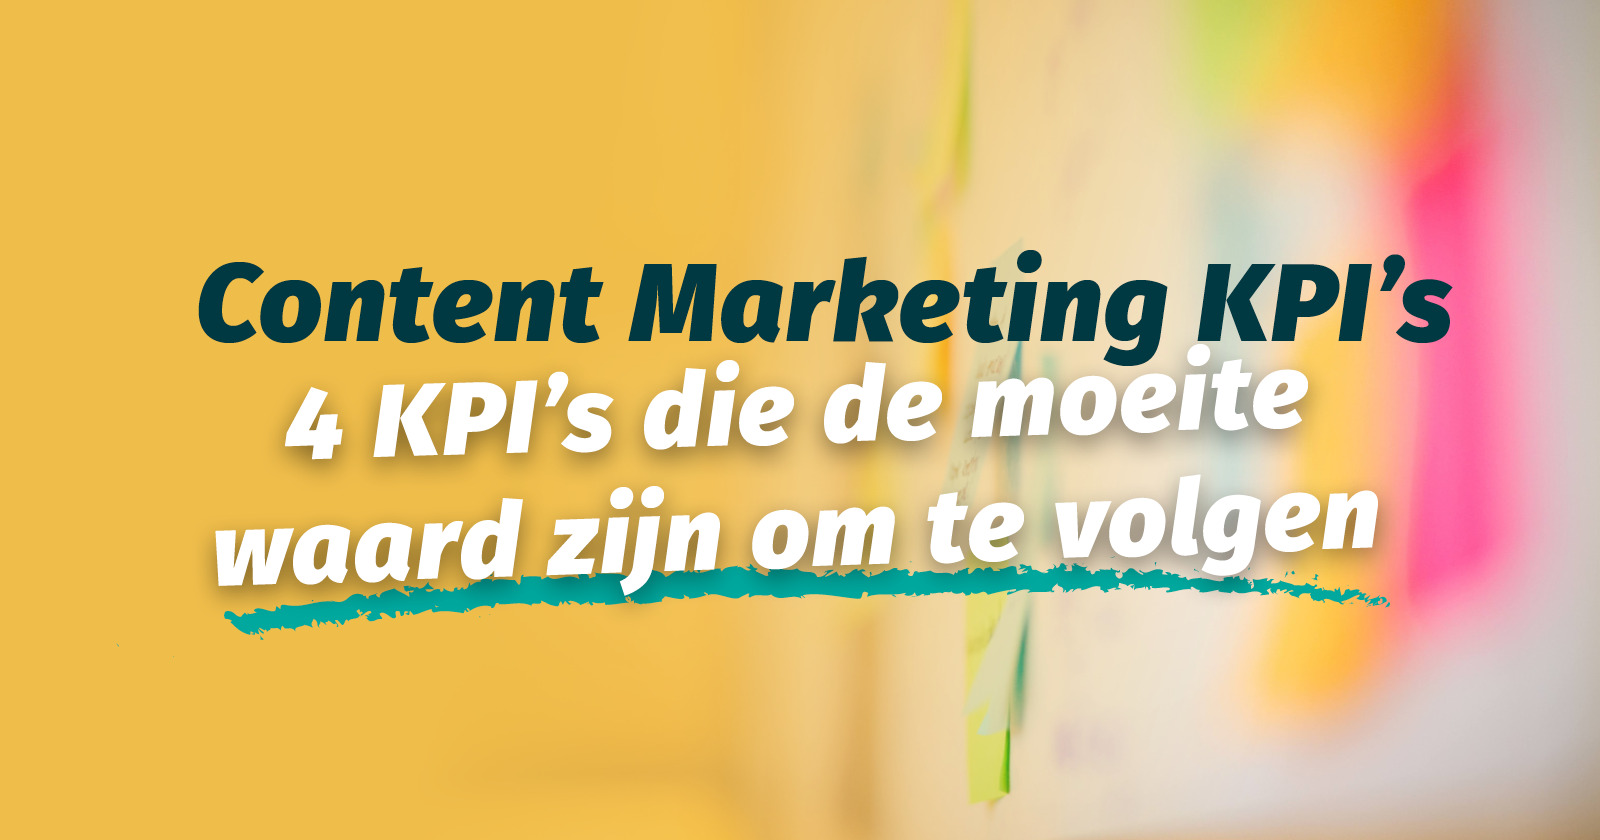 Content Marketing KPI